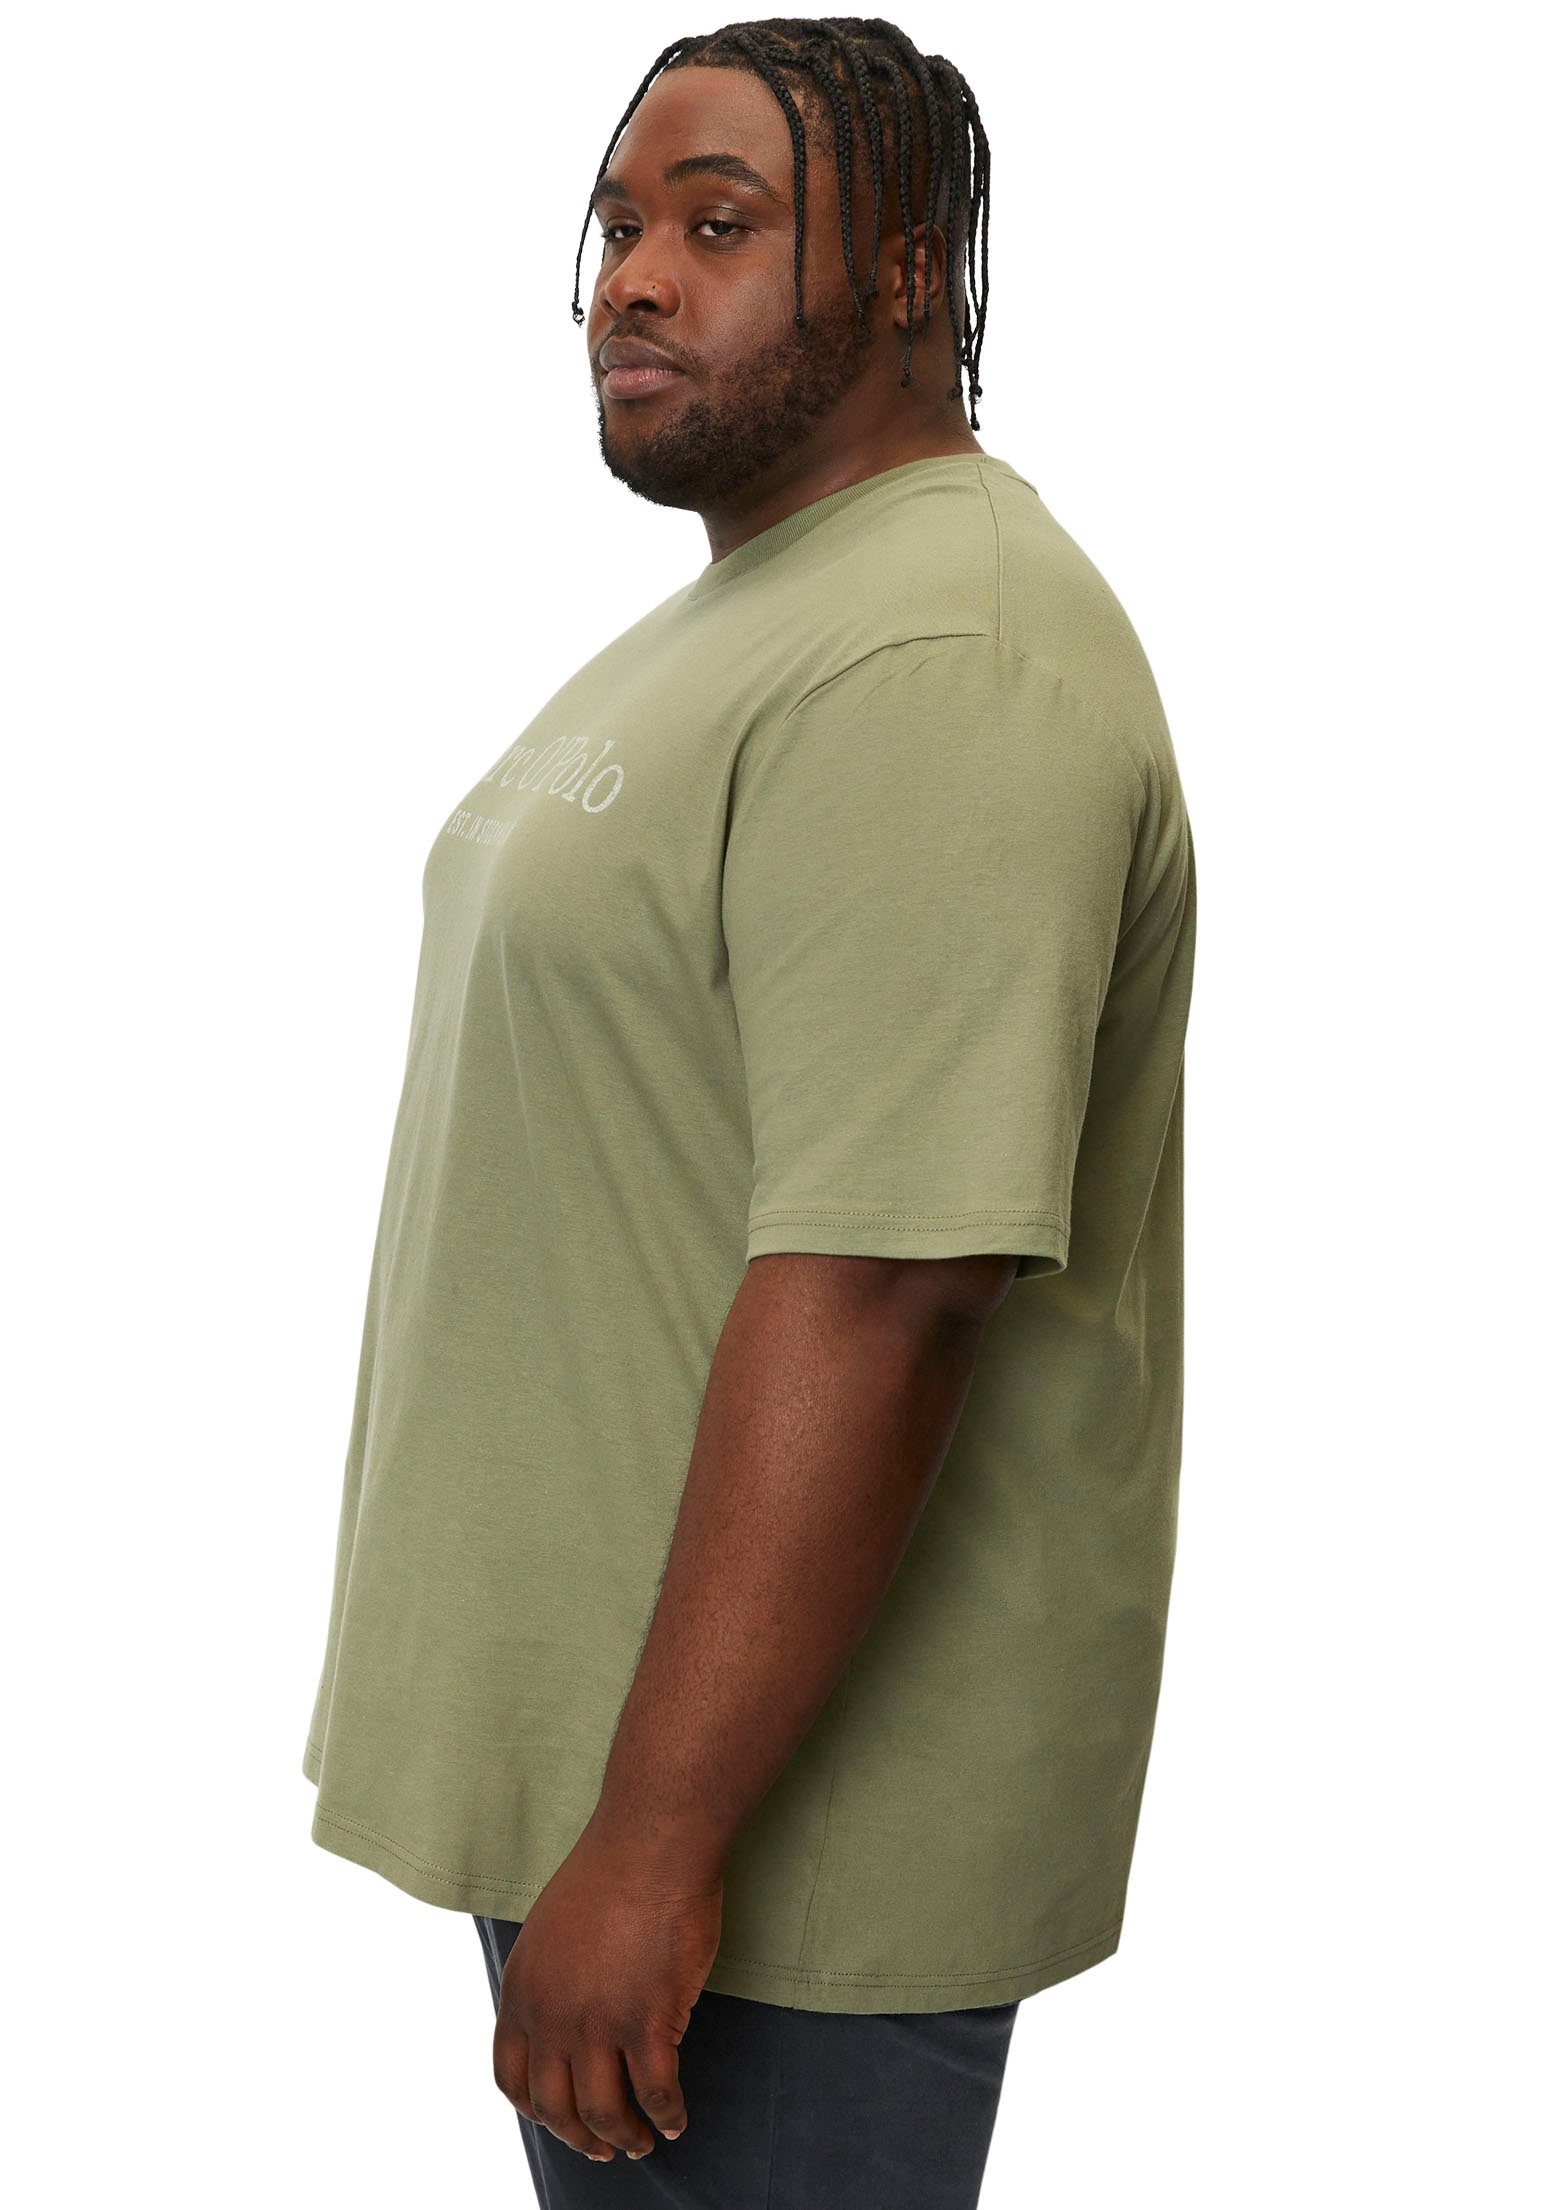 in O'Polo T-Shirt Big&Tall-Größen Marc olive